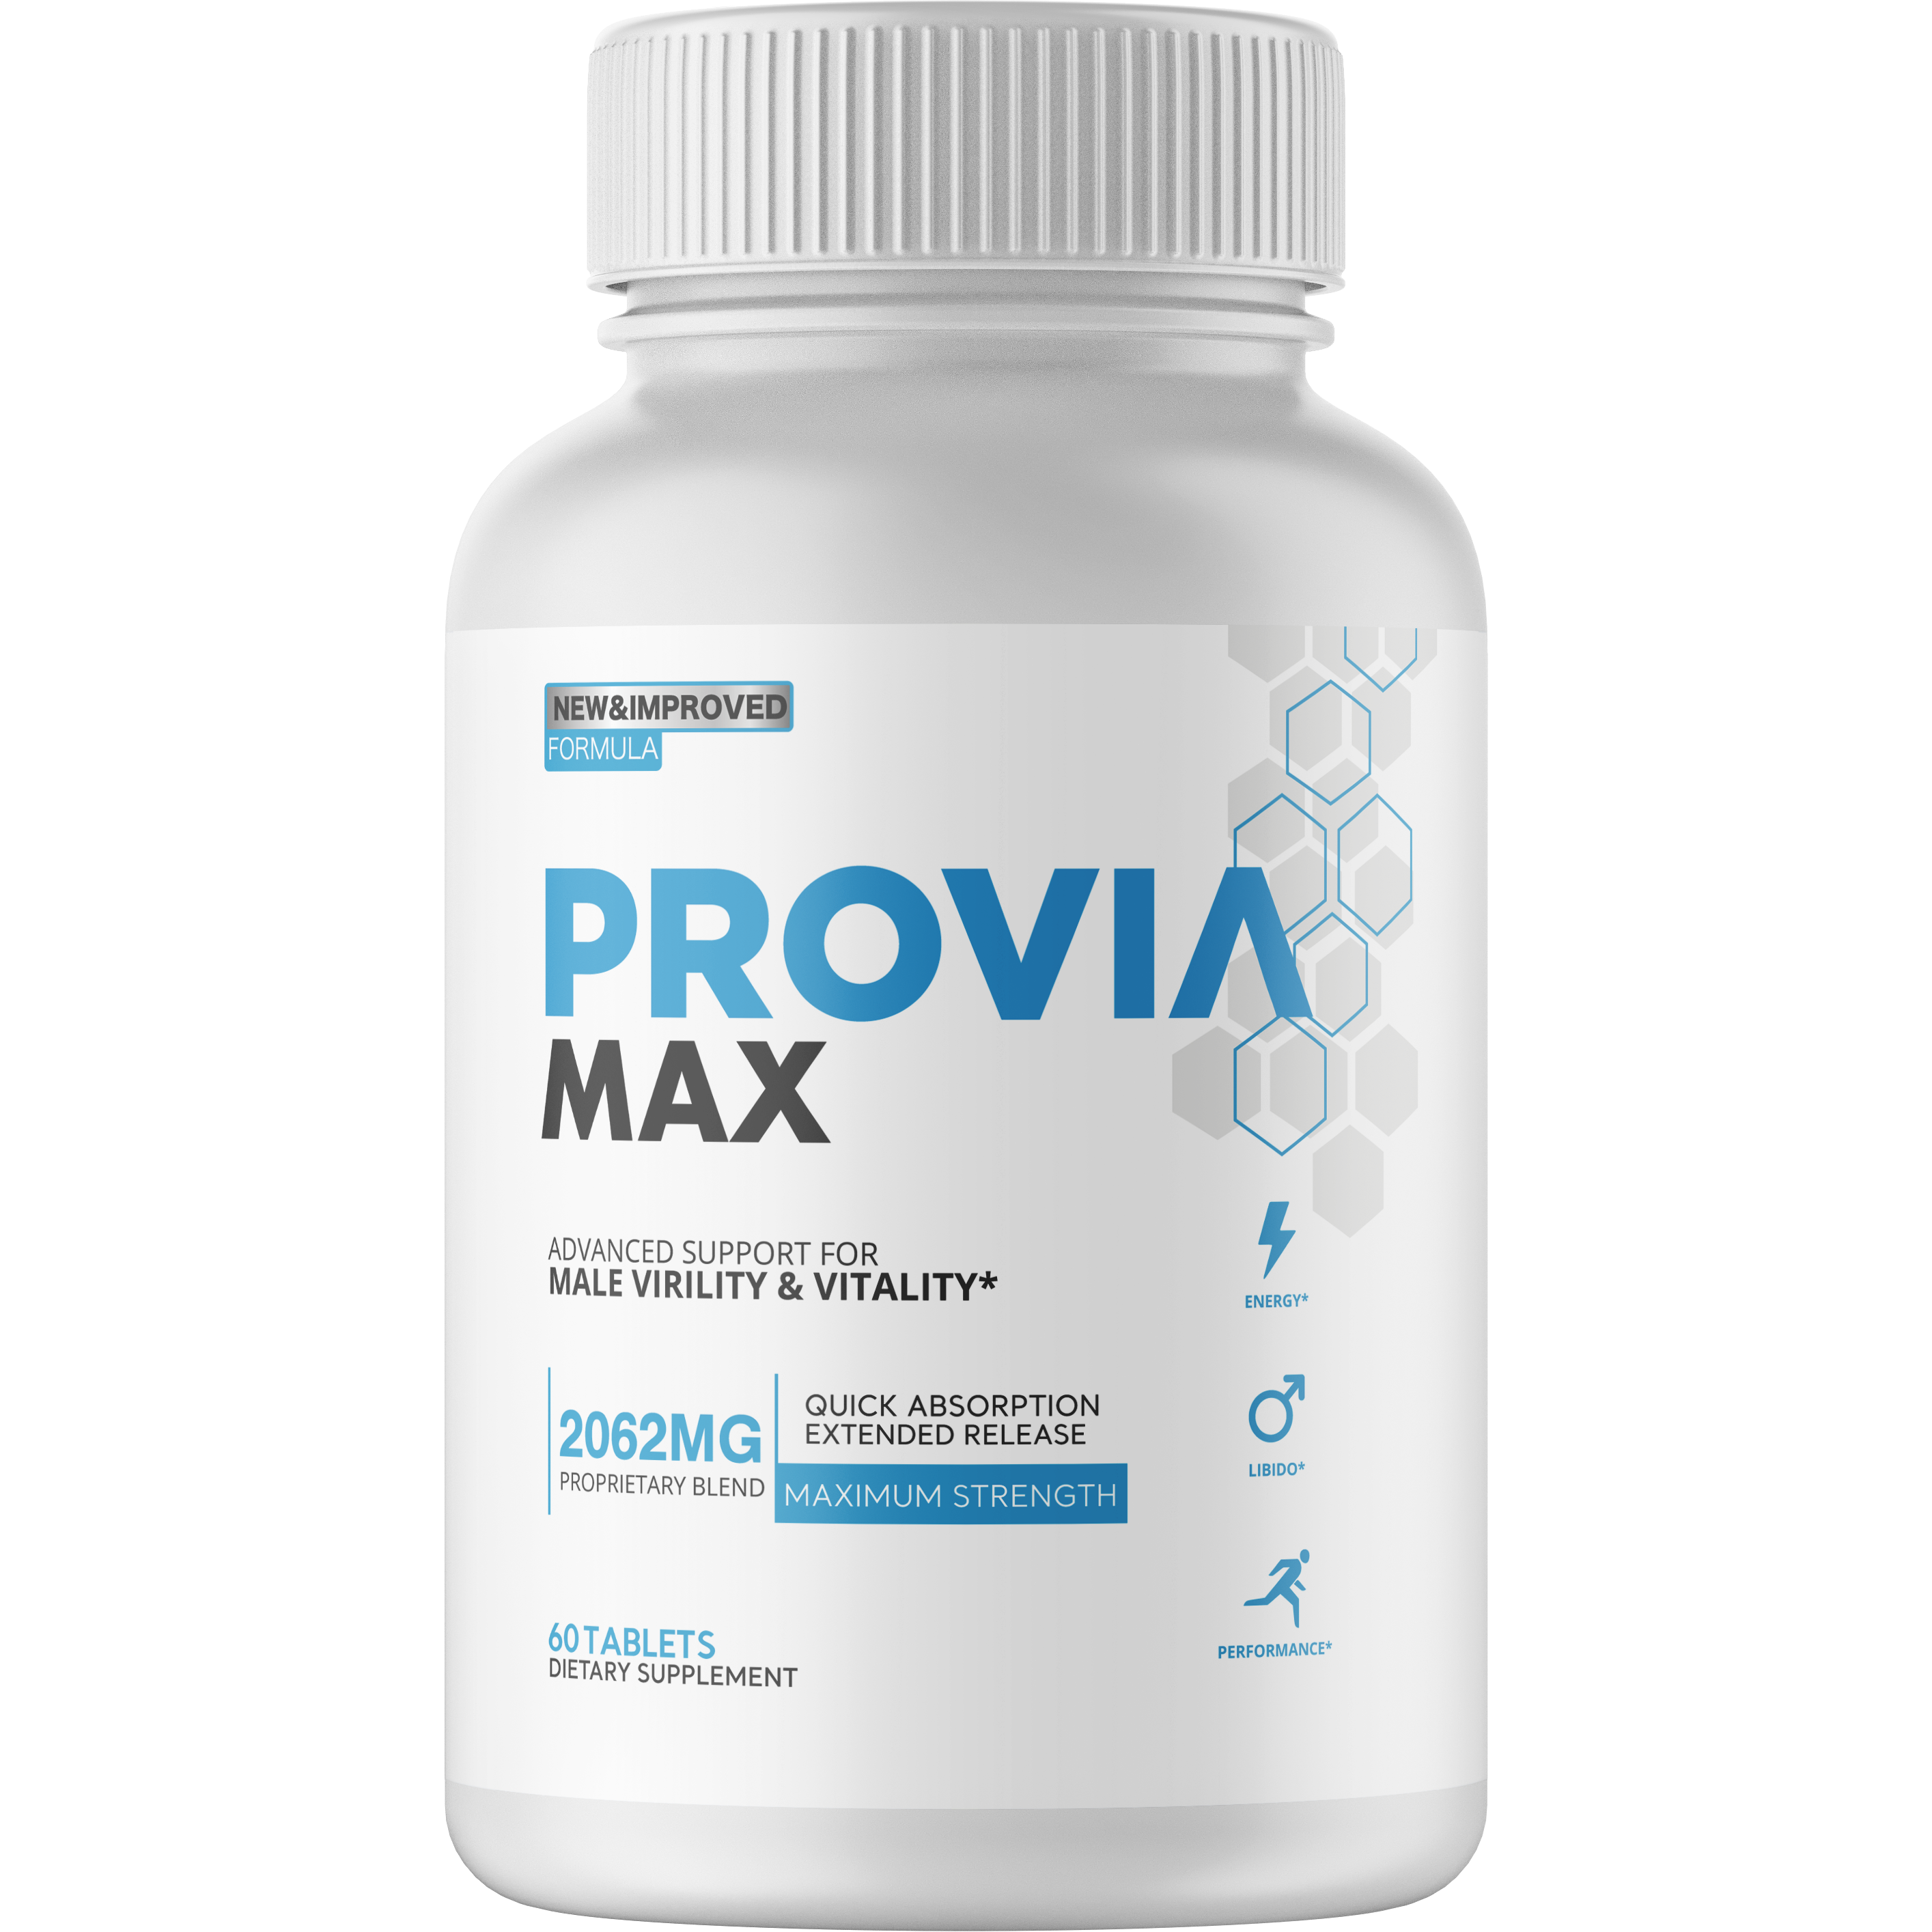 Provia Max - Male Virility and Vitality Support Enhancement - PROVIA MAX